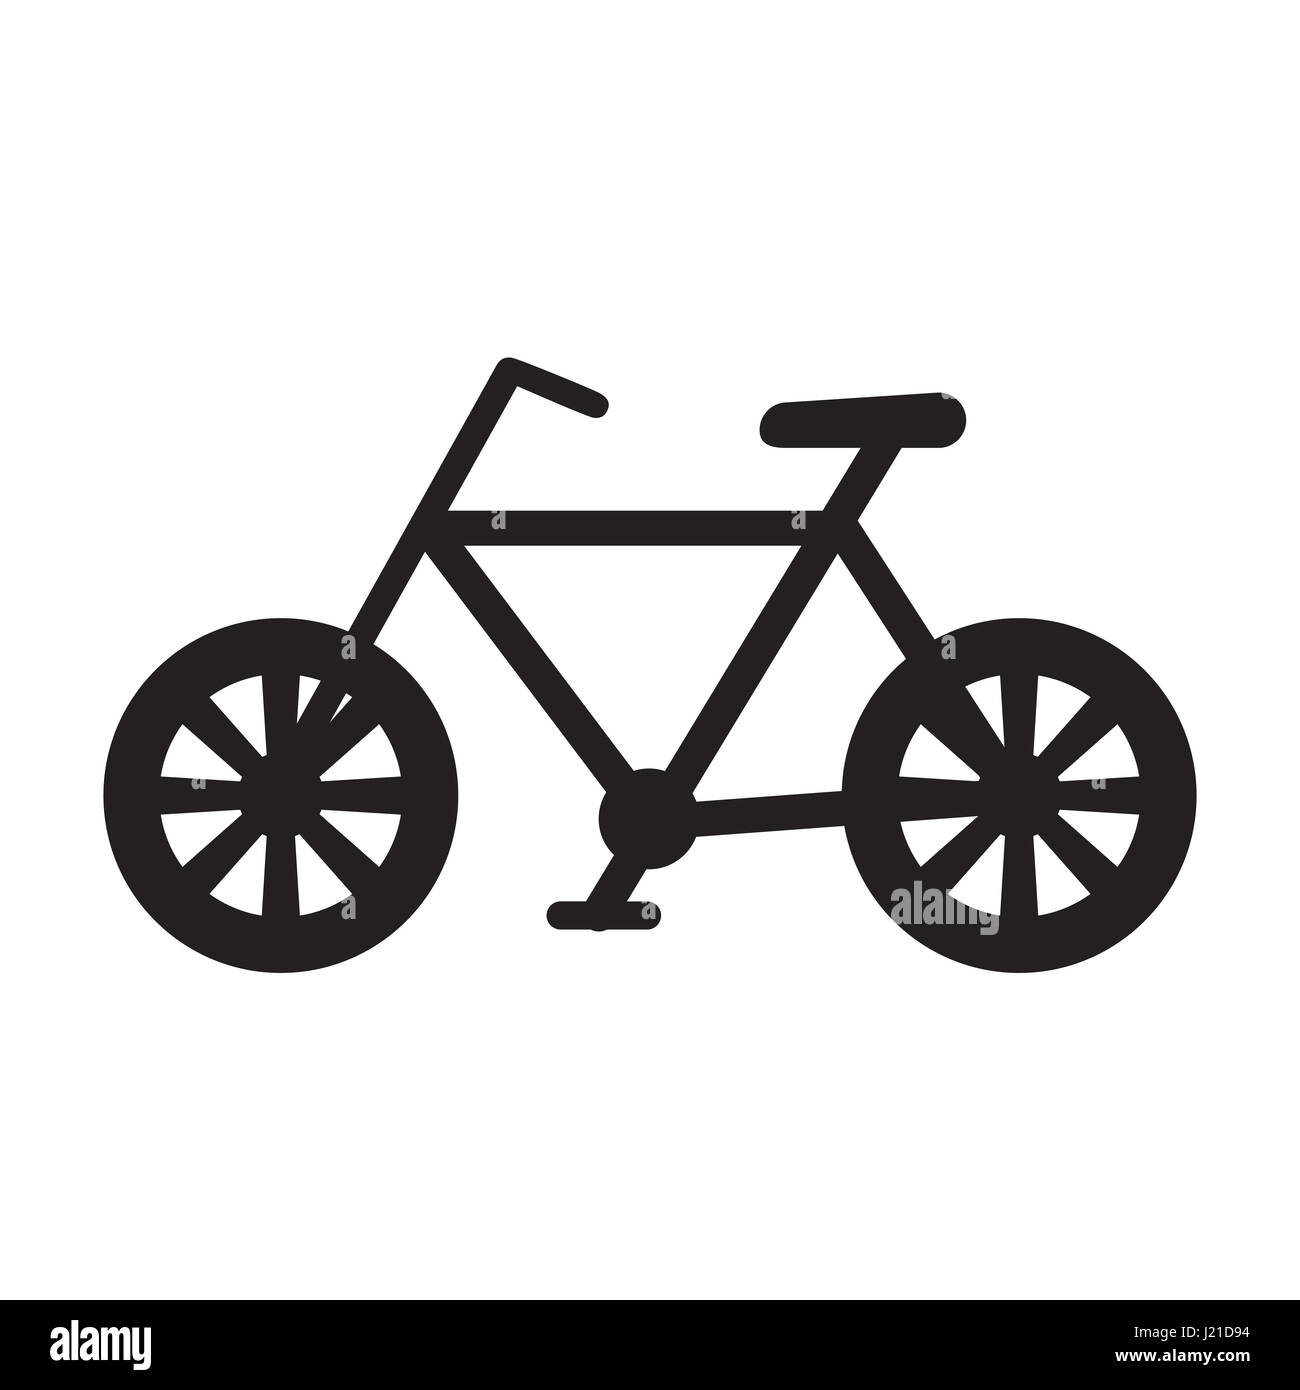 bicycle icon image Stock Photo